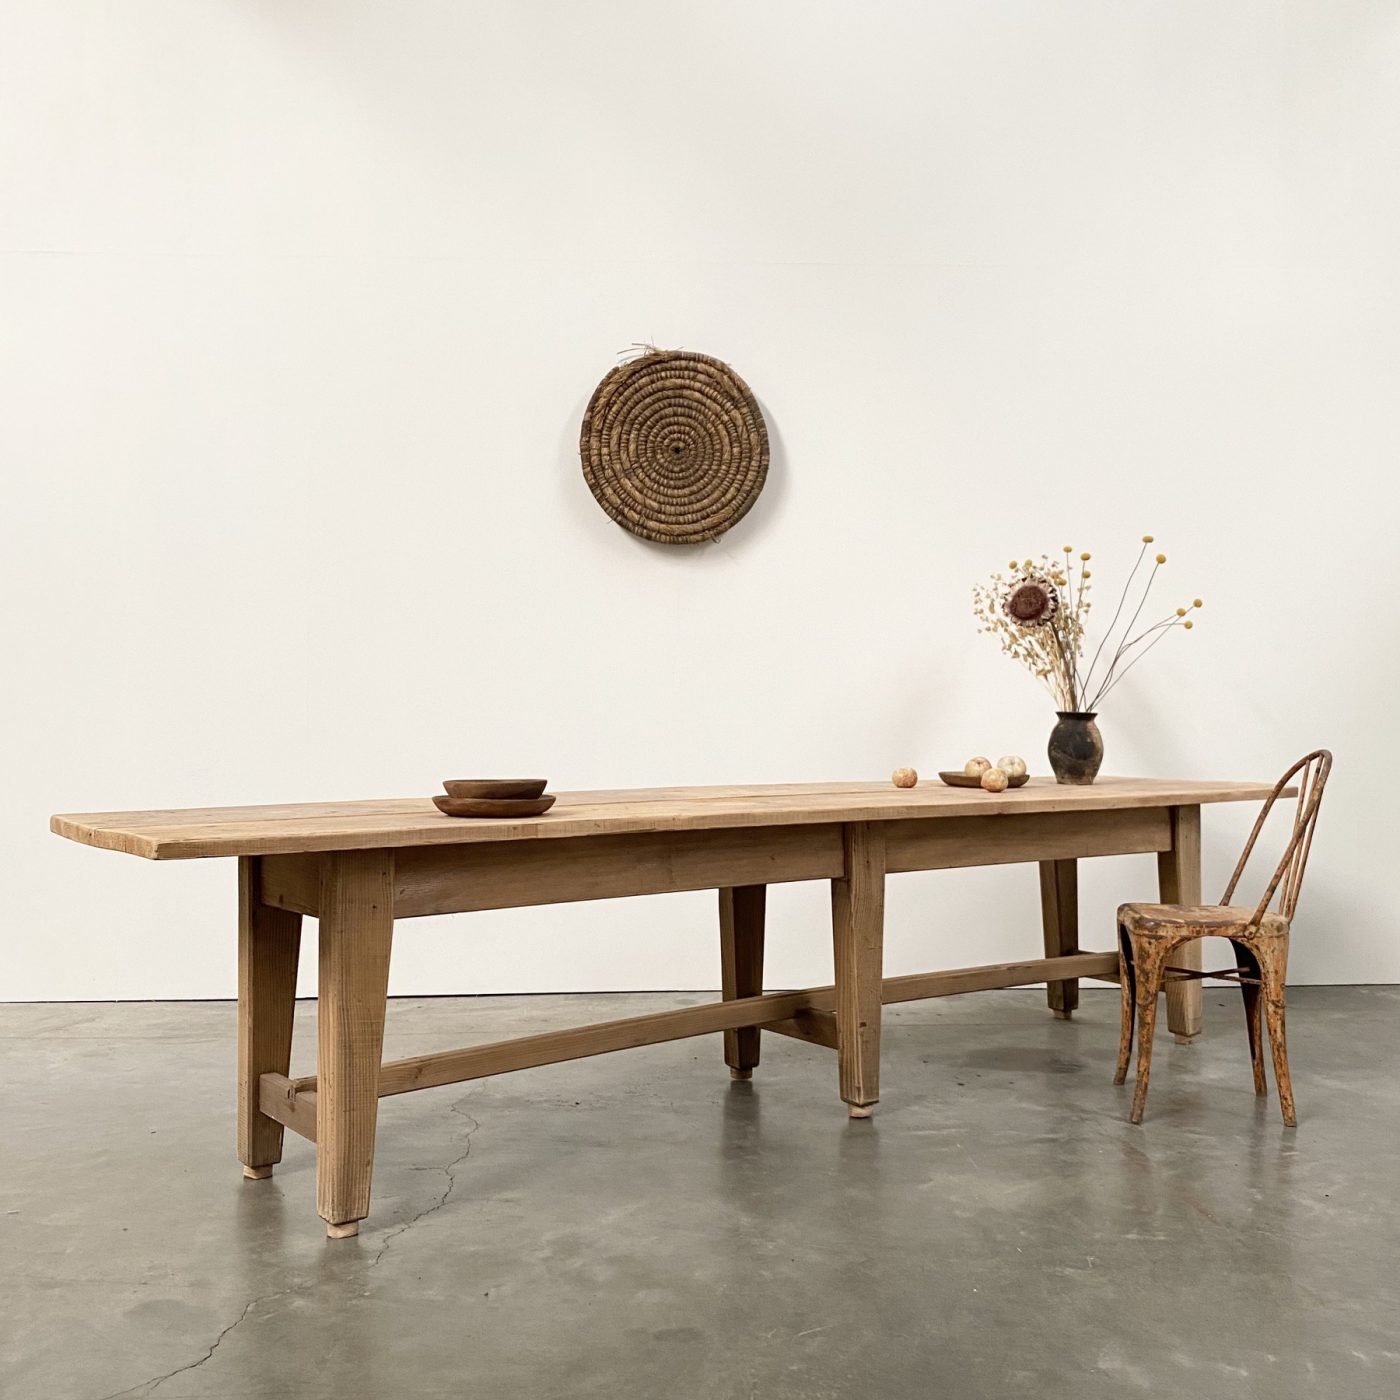 objet-vagabond-pine-table0004